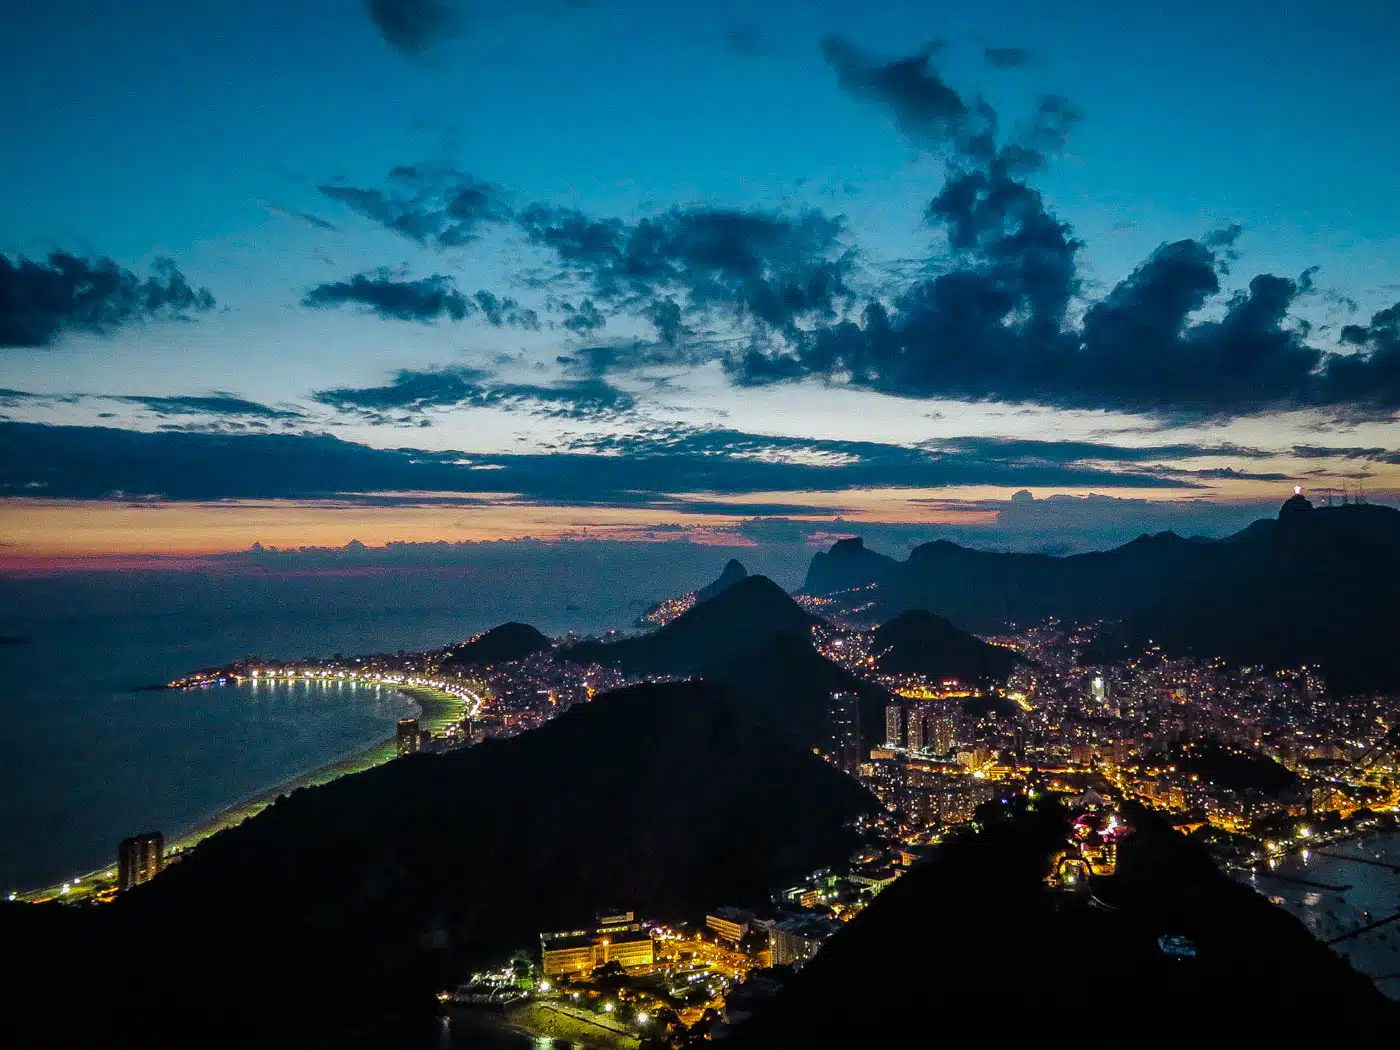 Asia carrera in Rio de Janeiro